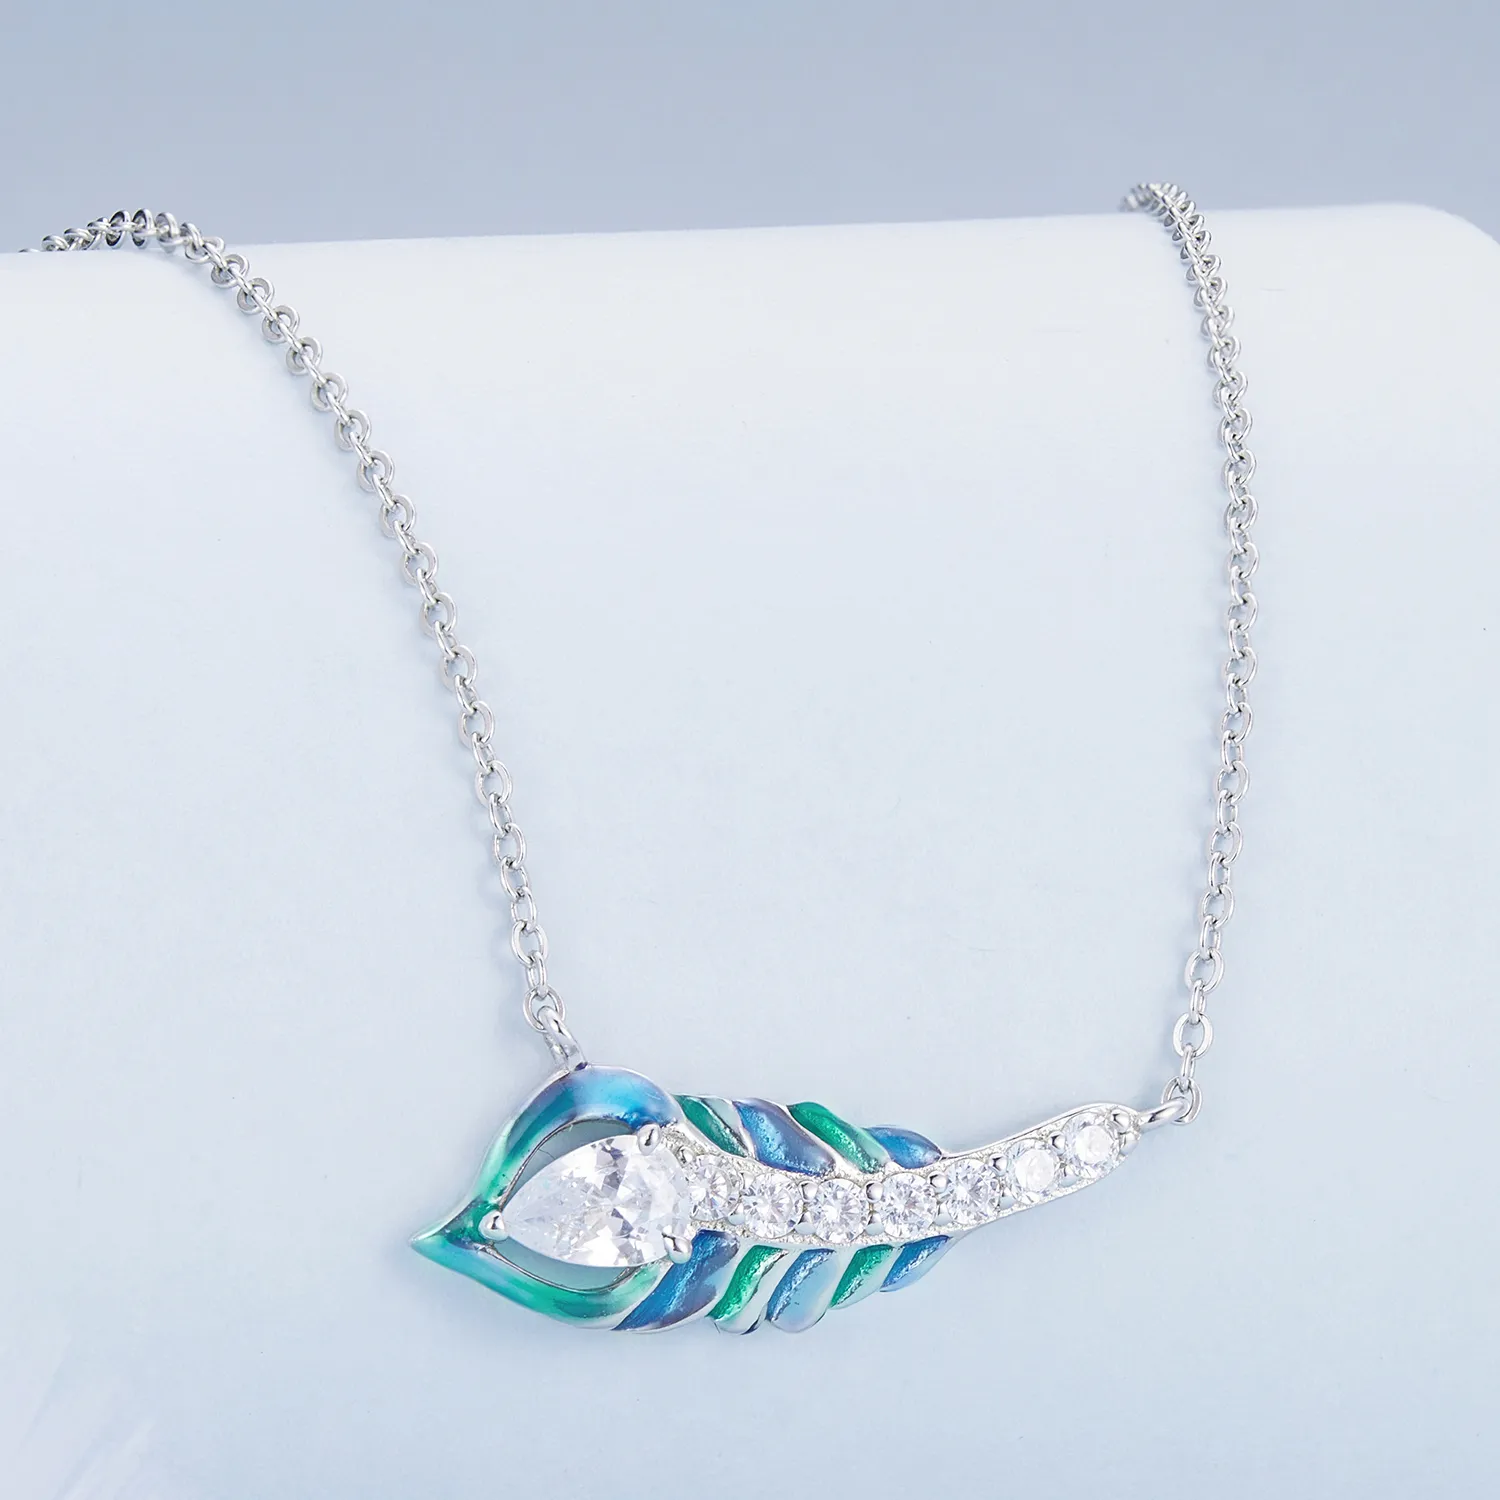 Pandora Style Feather Necklace - BSN346